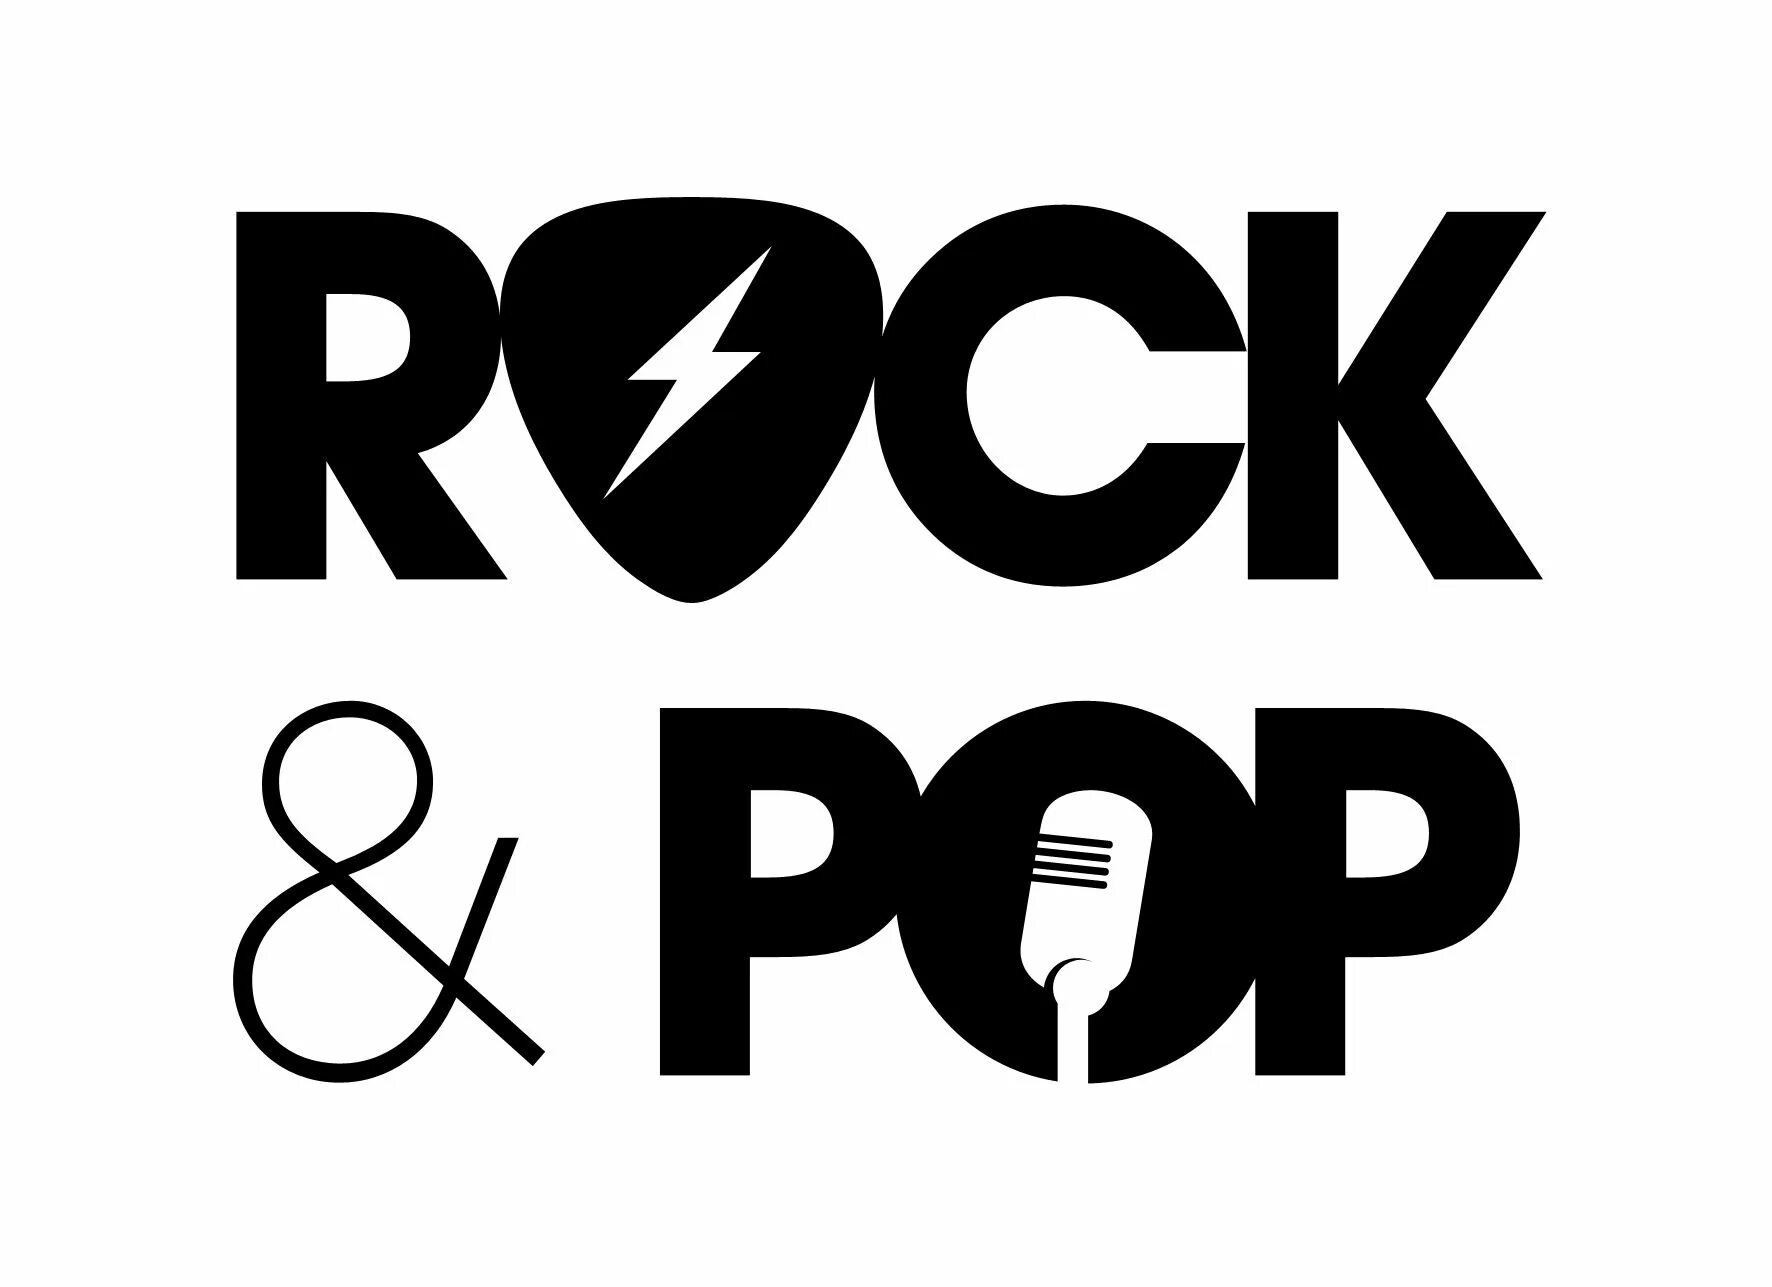 Pop music song. Pop надпись. Pop Music логотип. Поп рок. Рок логотипы.